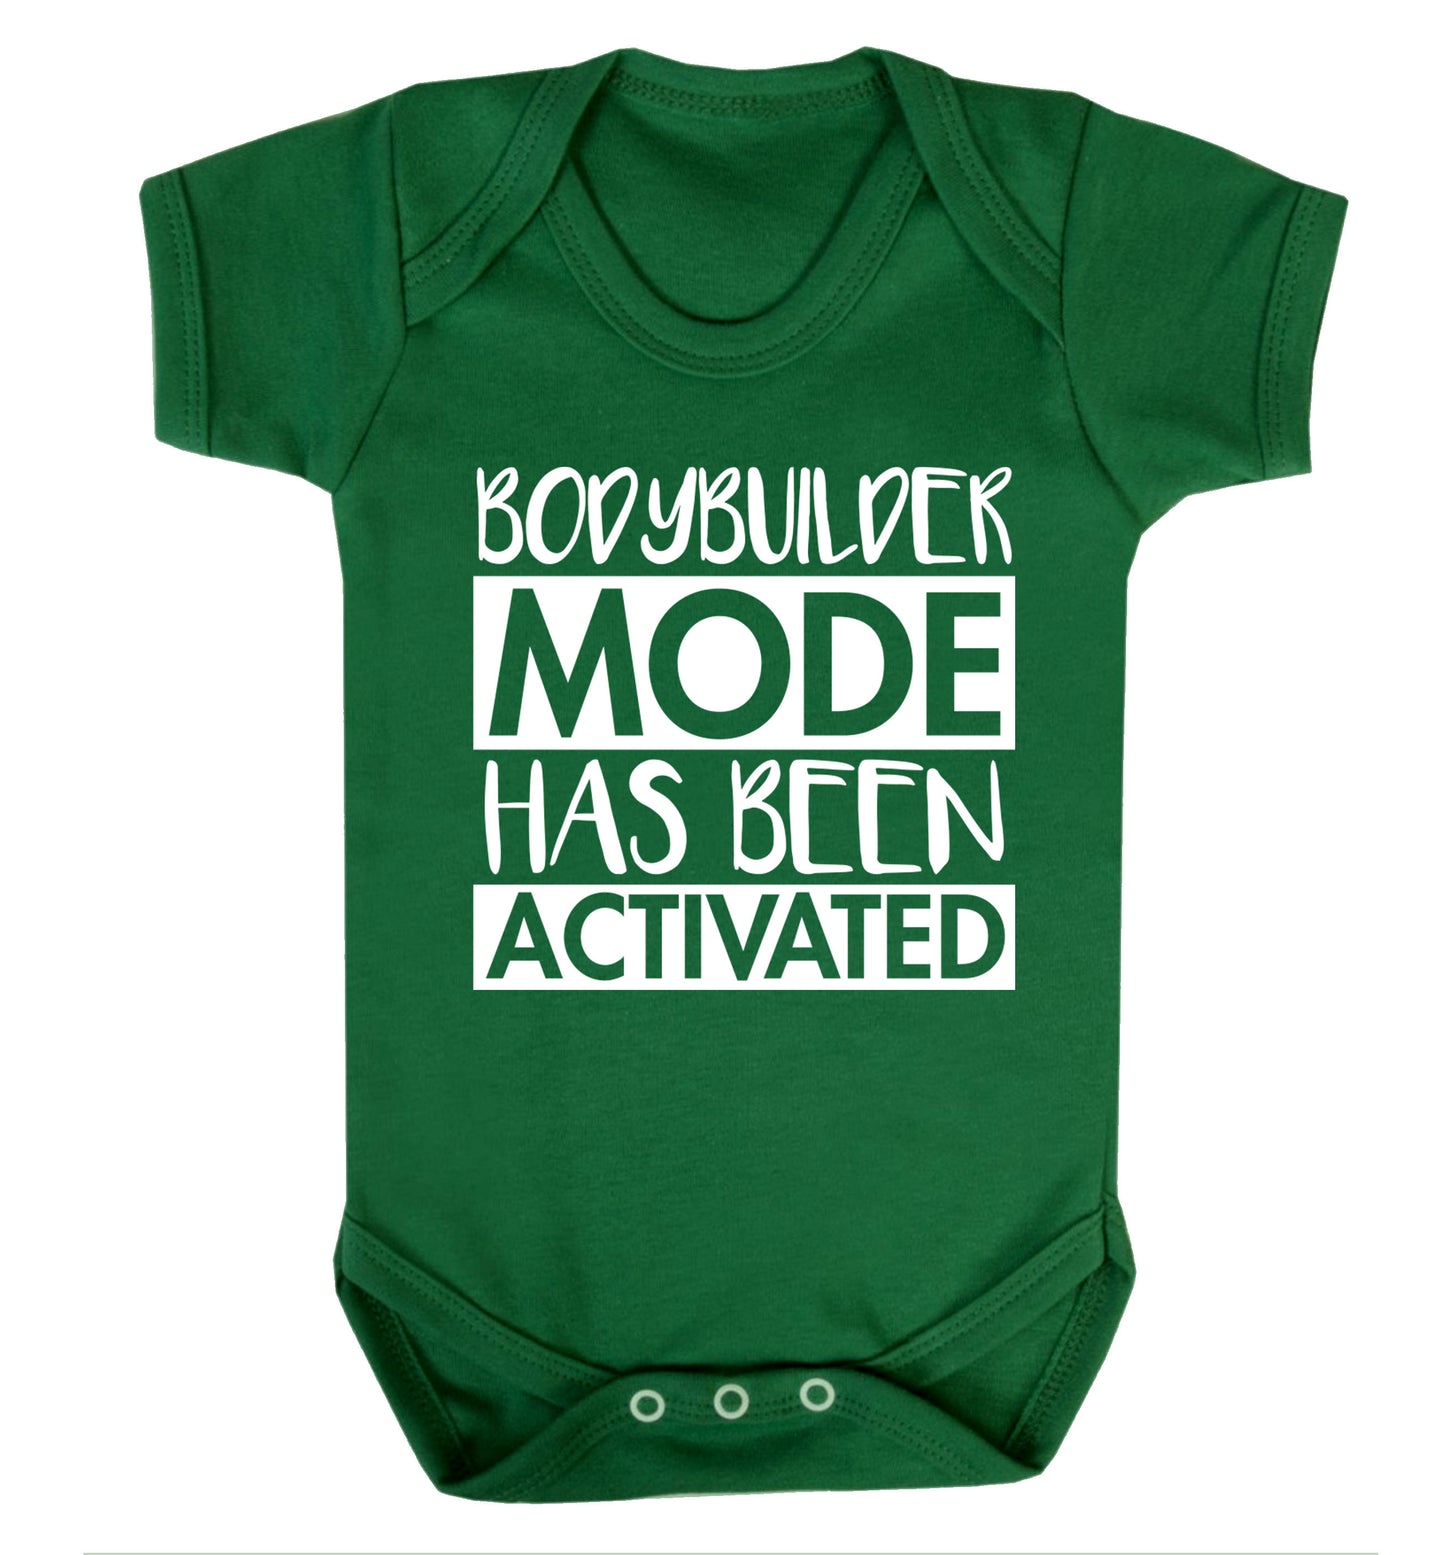 Bodybuilder mode activated Baby Vest green 18-24 months